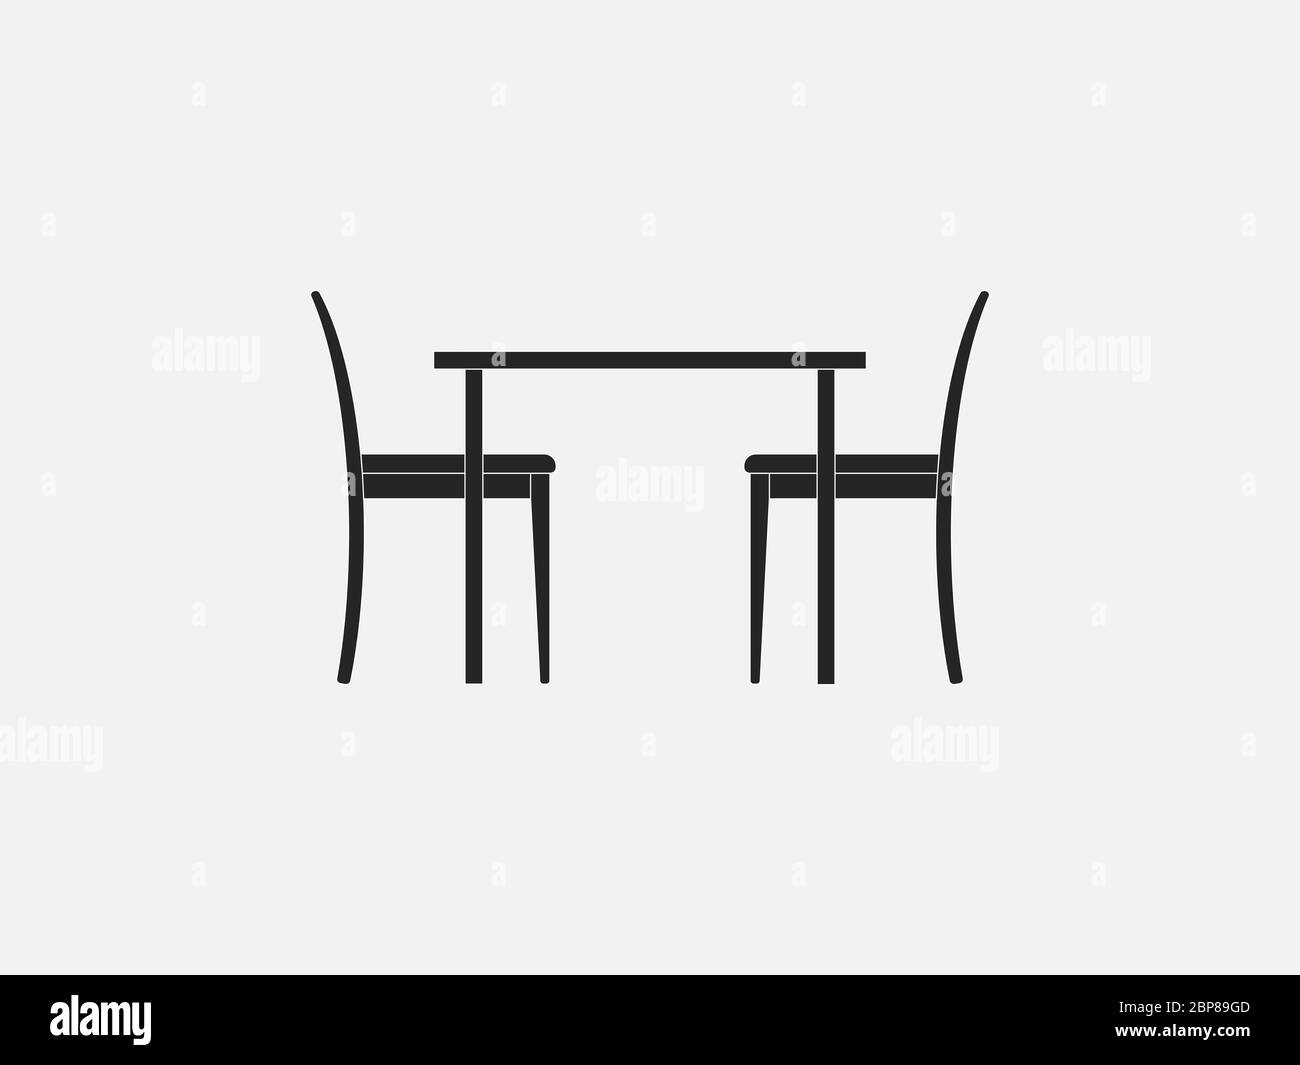 Stuhl, Tischsymbol. Vektorgrafik, flaches Design. Stock Vektor